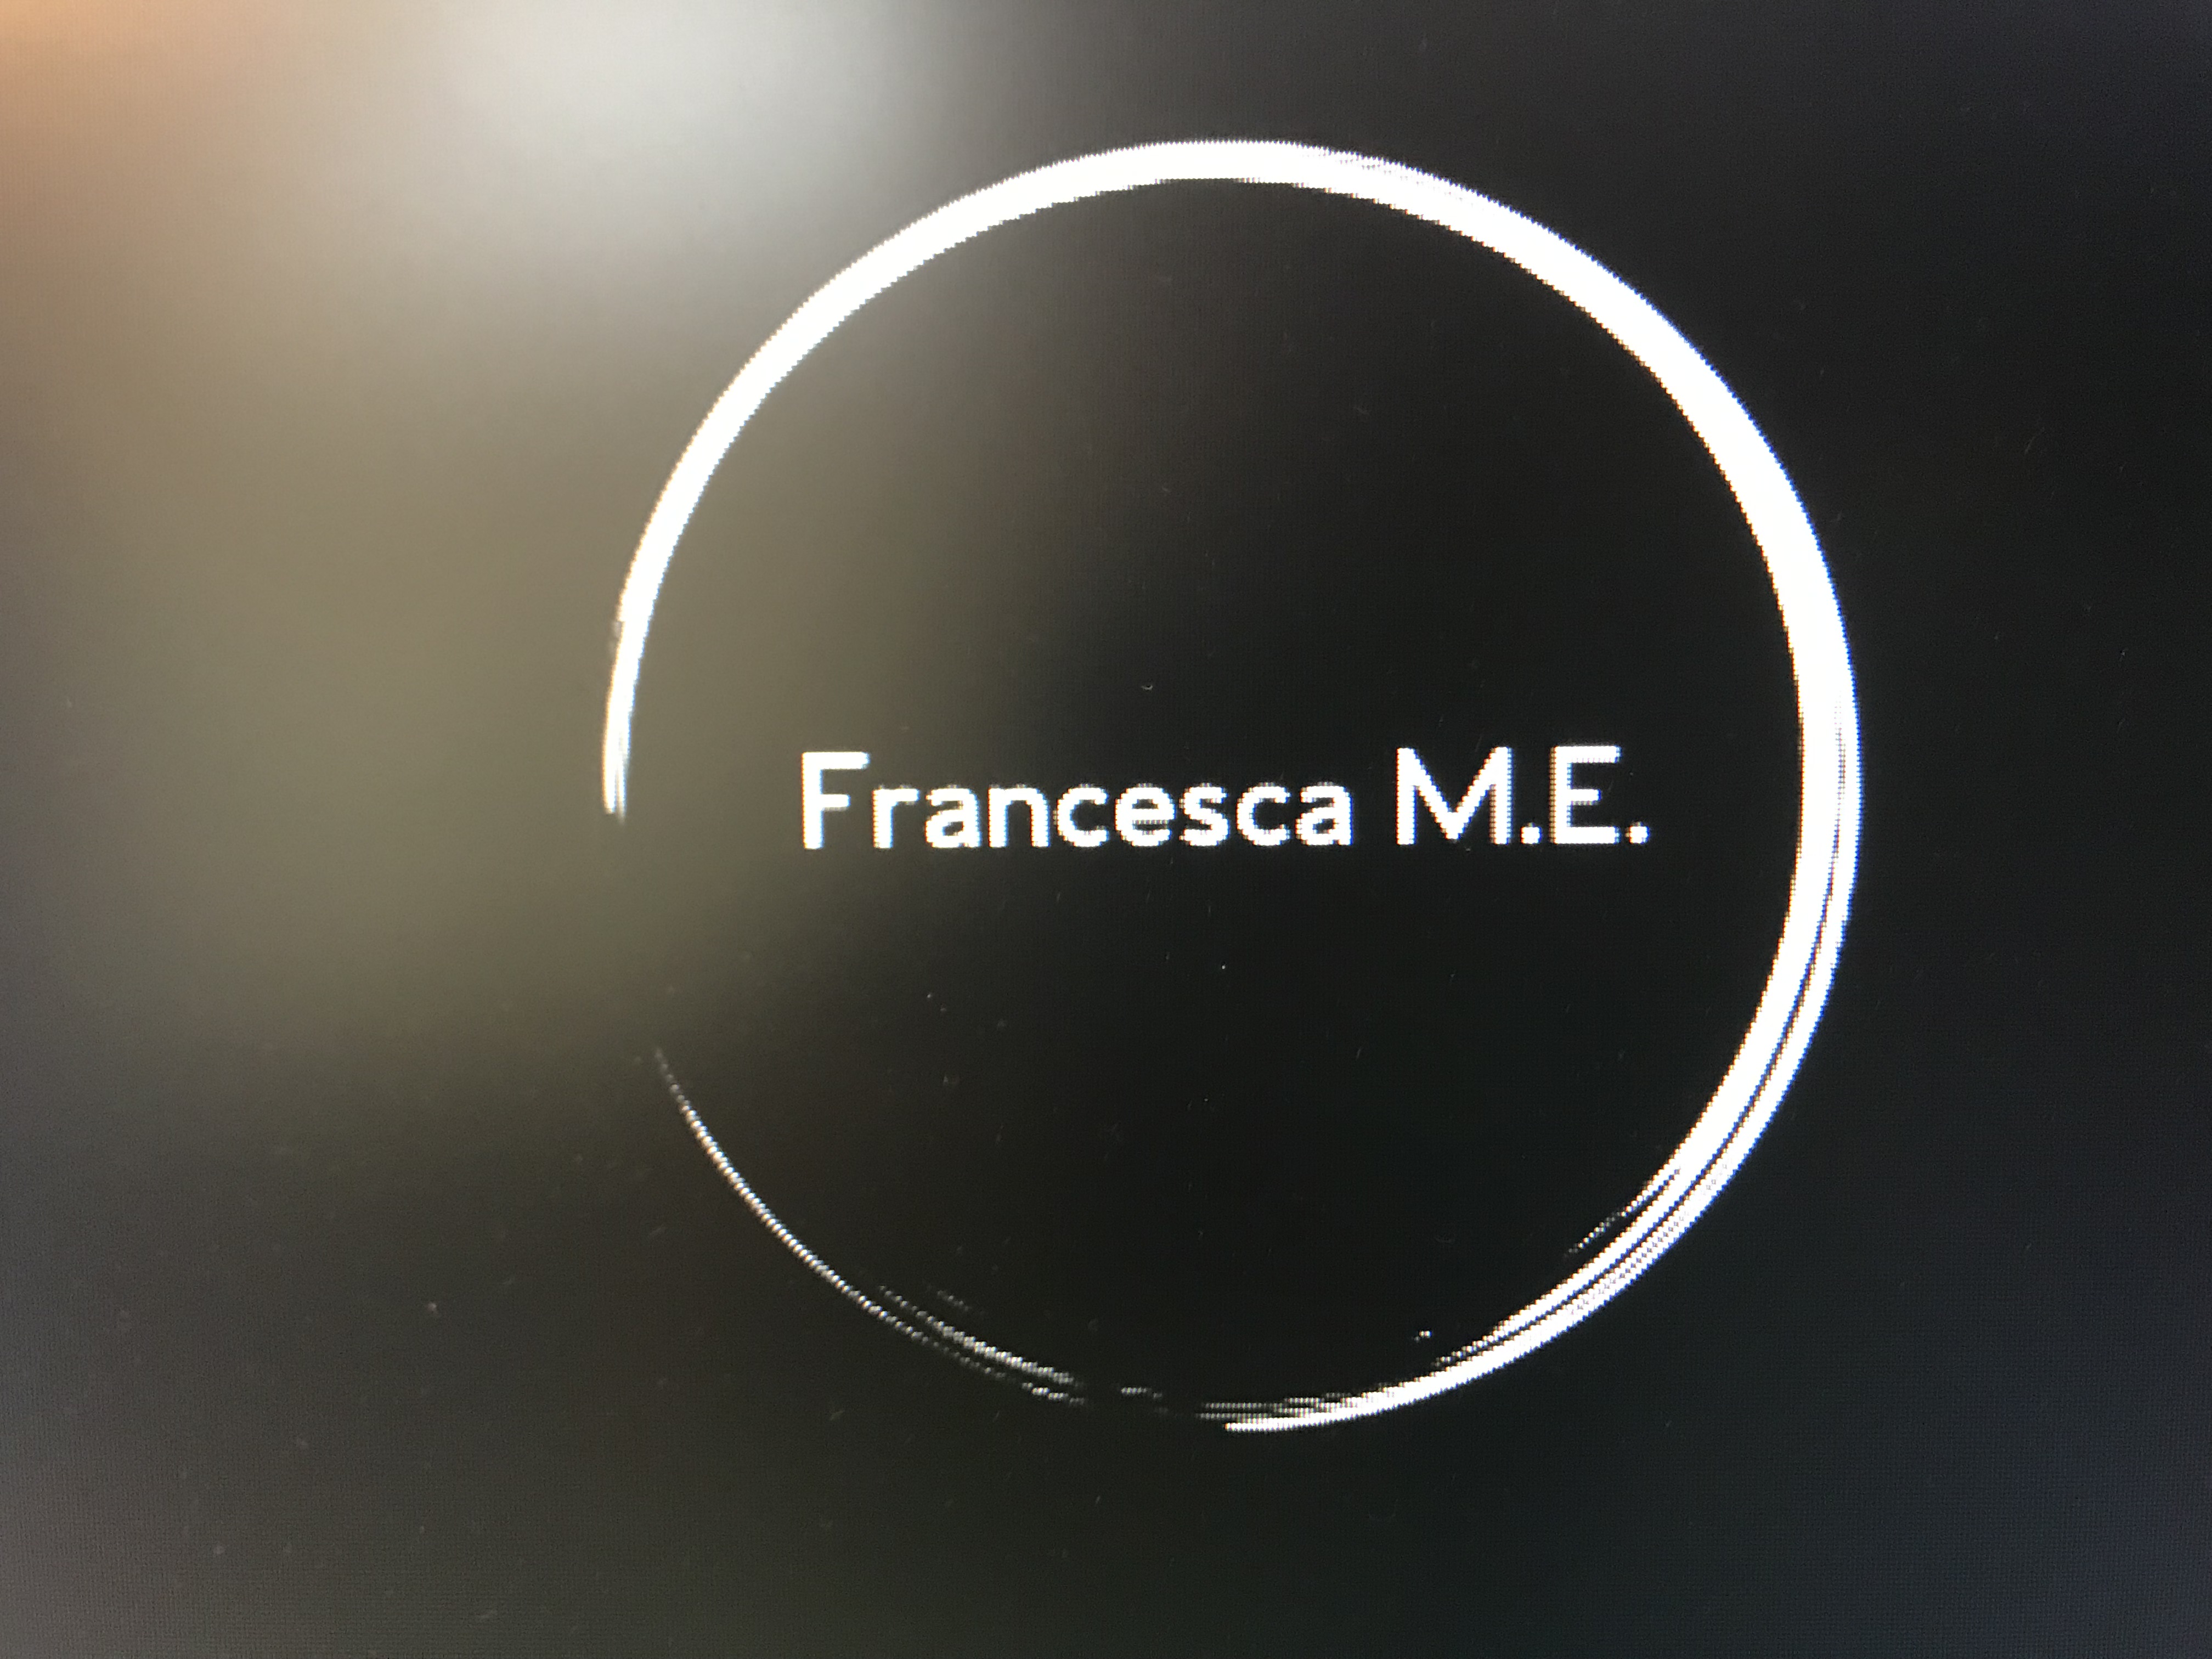 Francesca M.E.